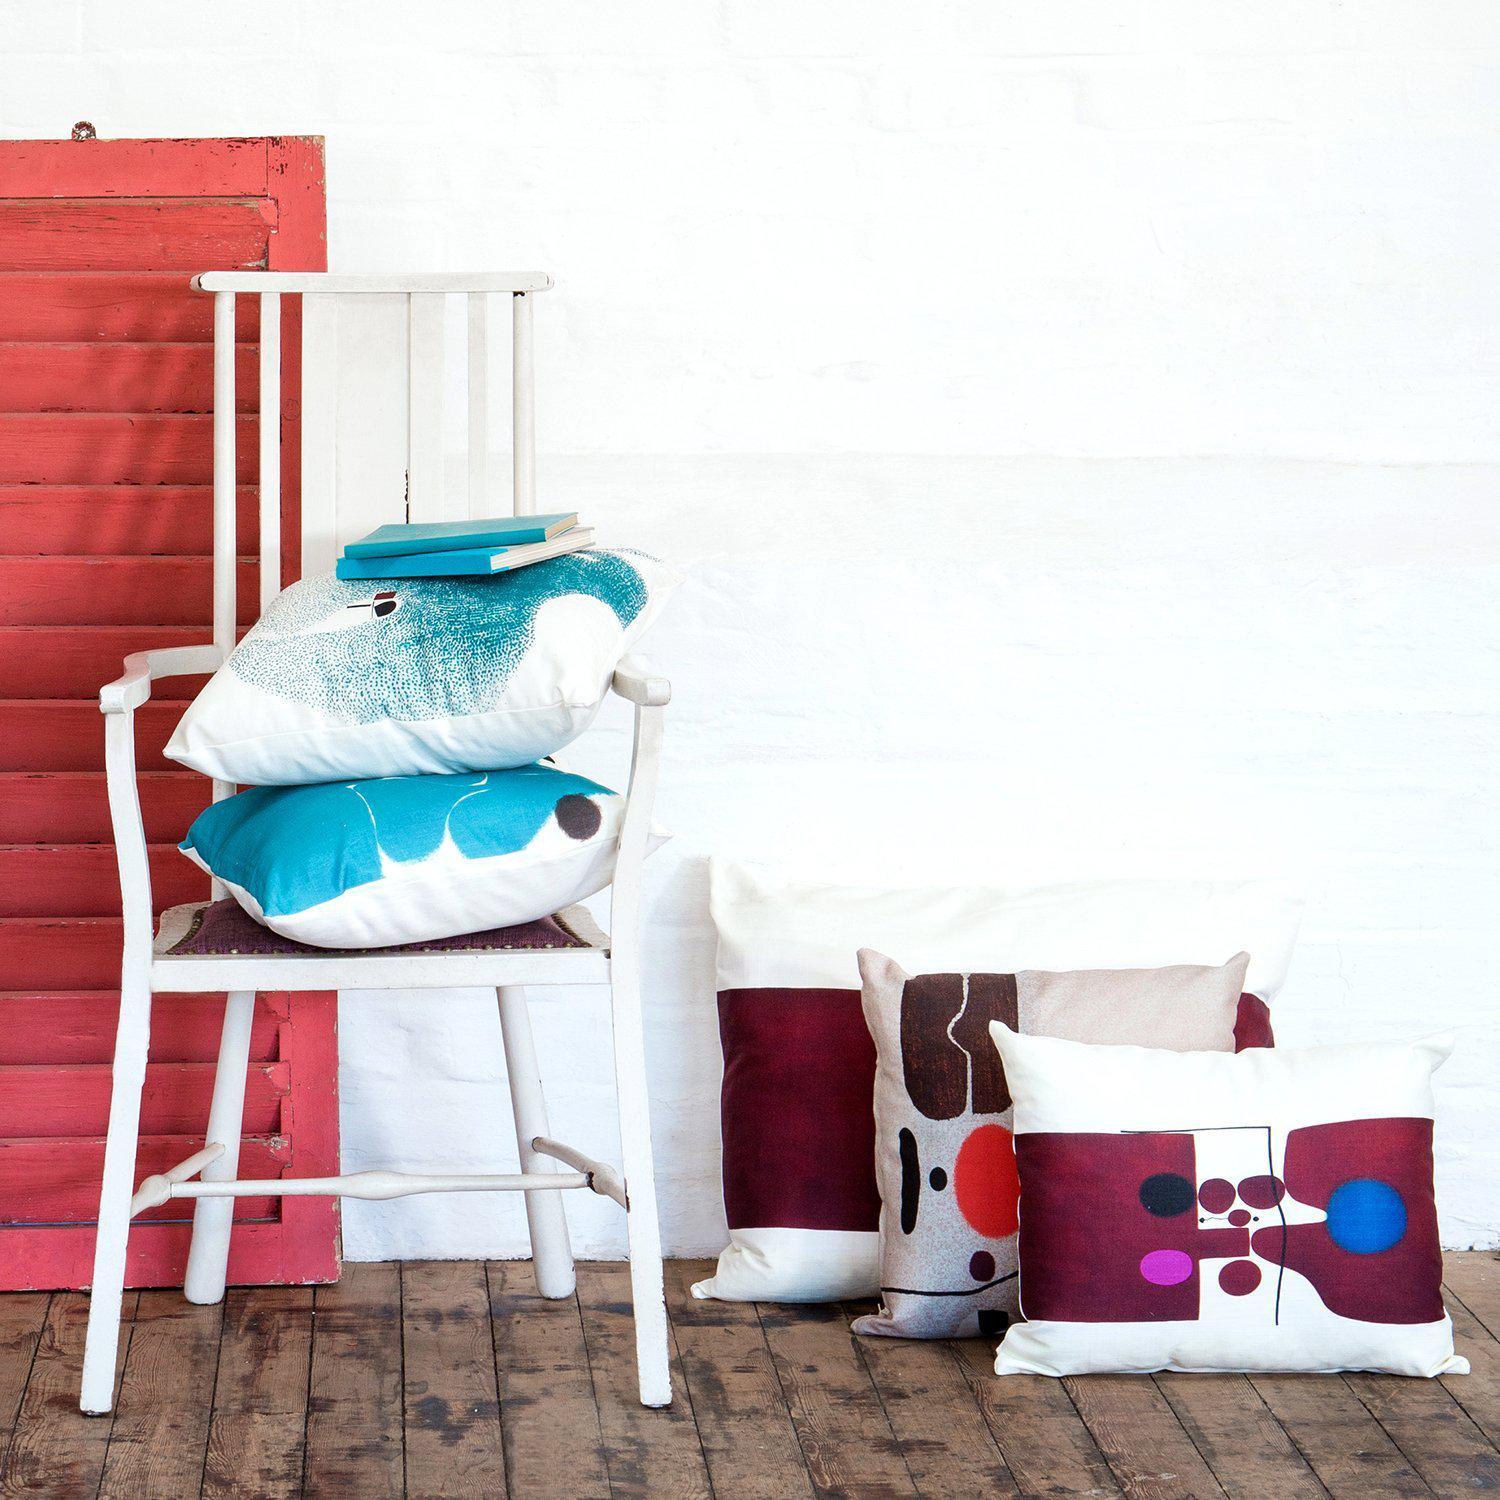 St.Ives - Alfred Wallis - TATE Gallery Cushion - Handmade Cushions UK - WeLoveCushions